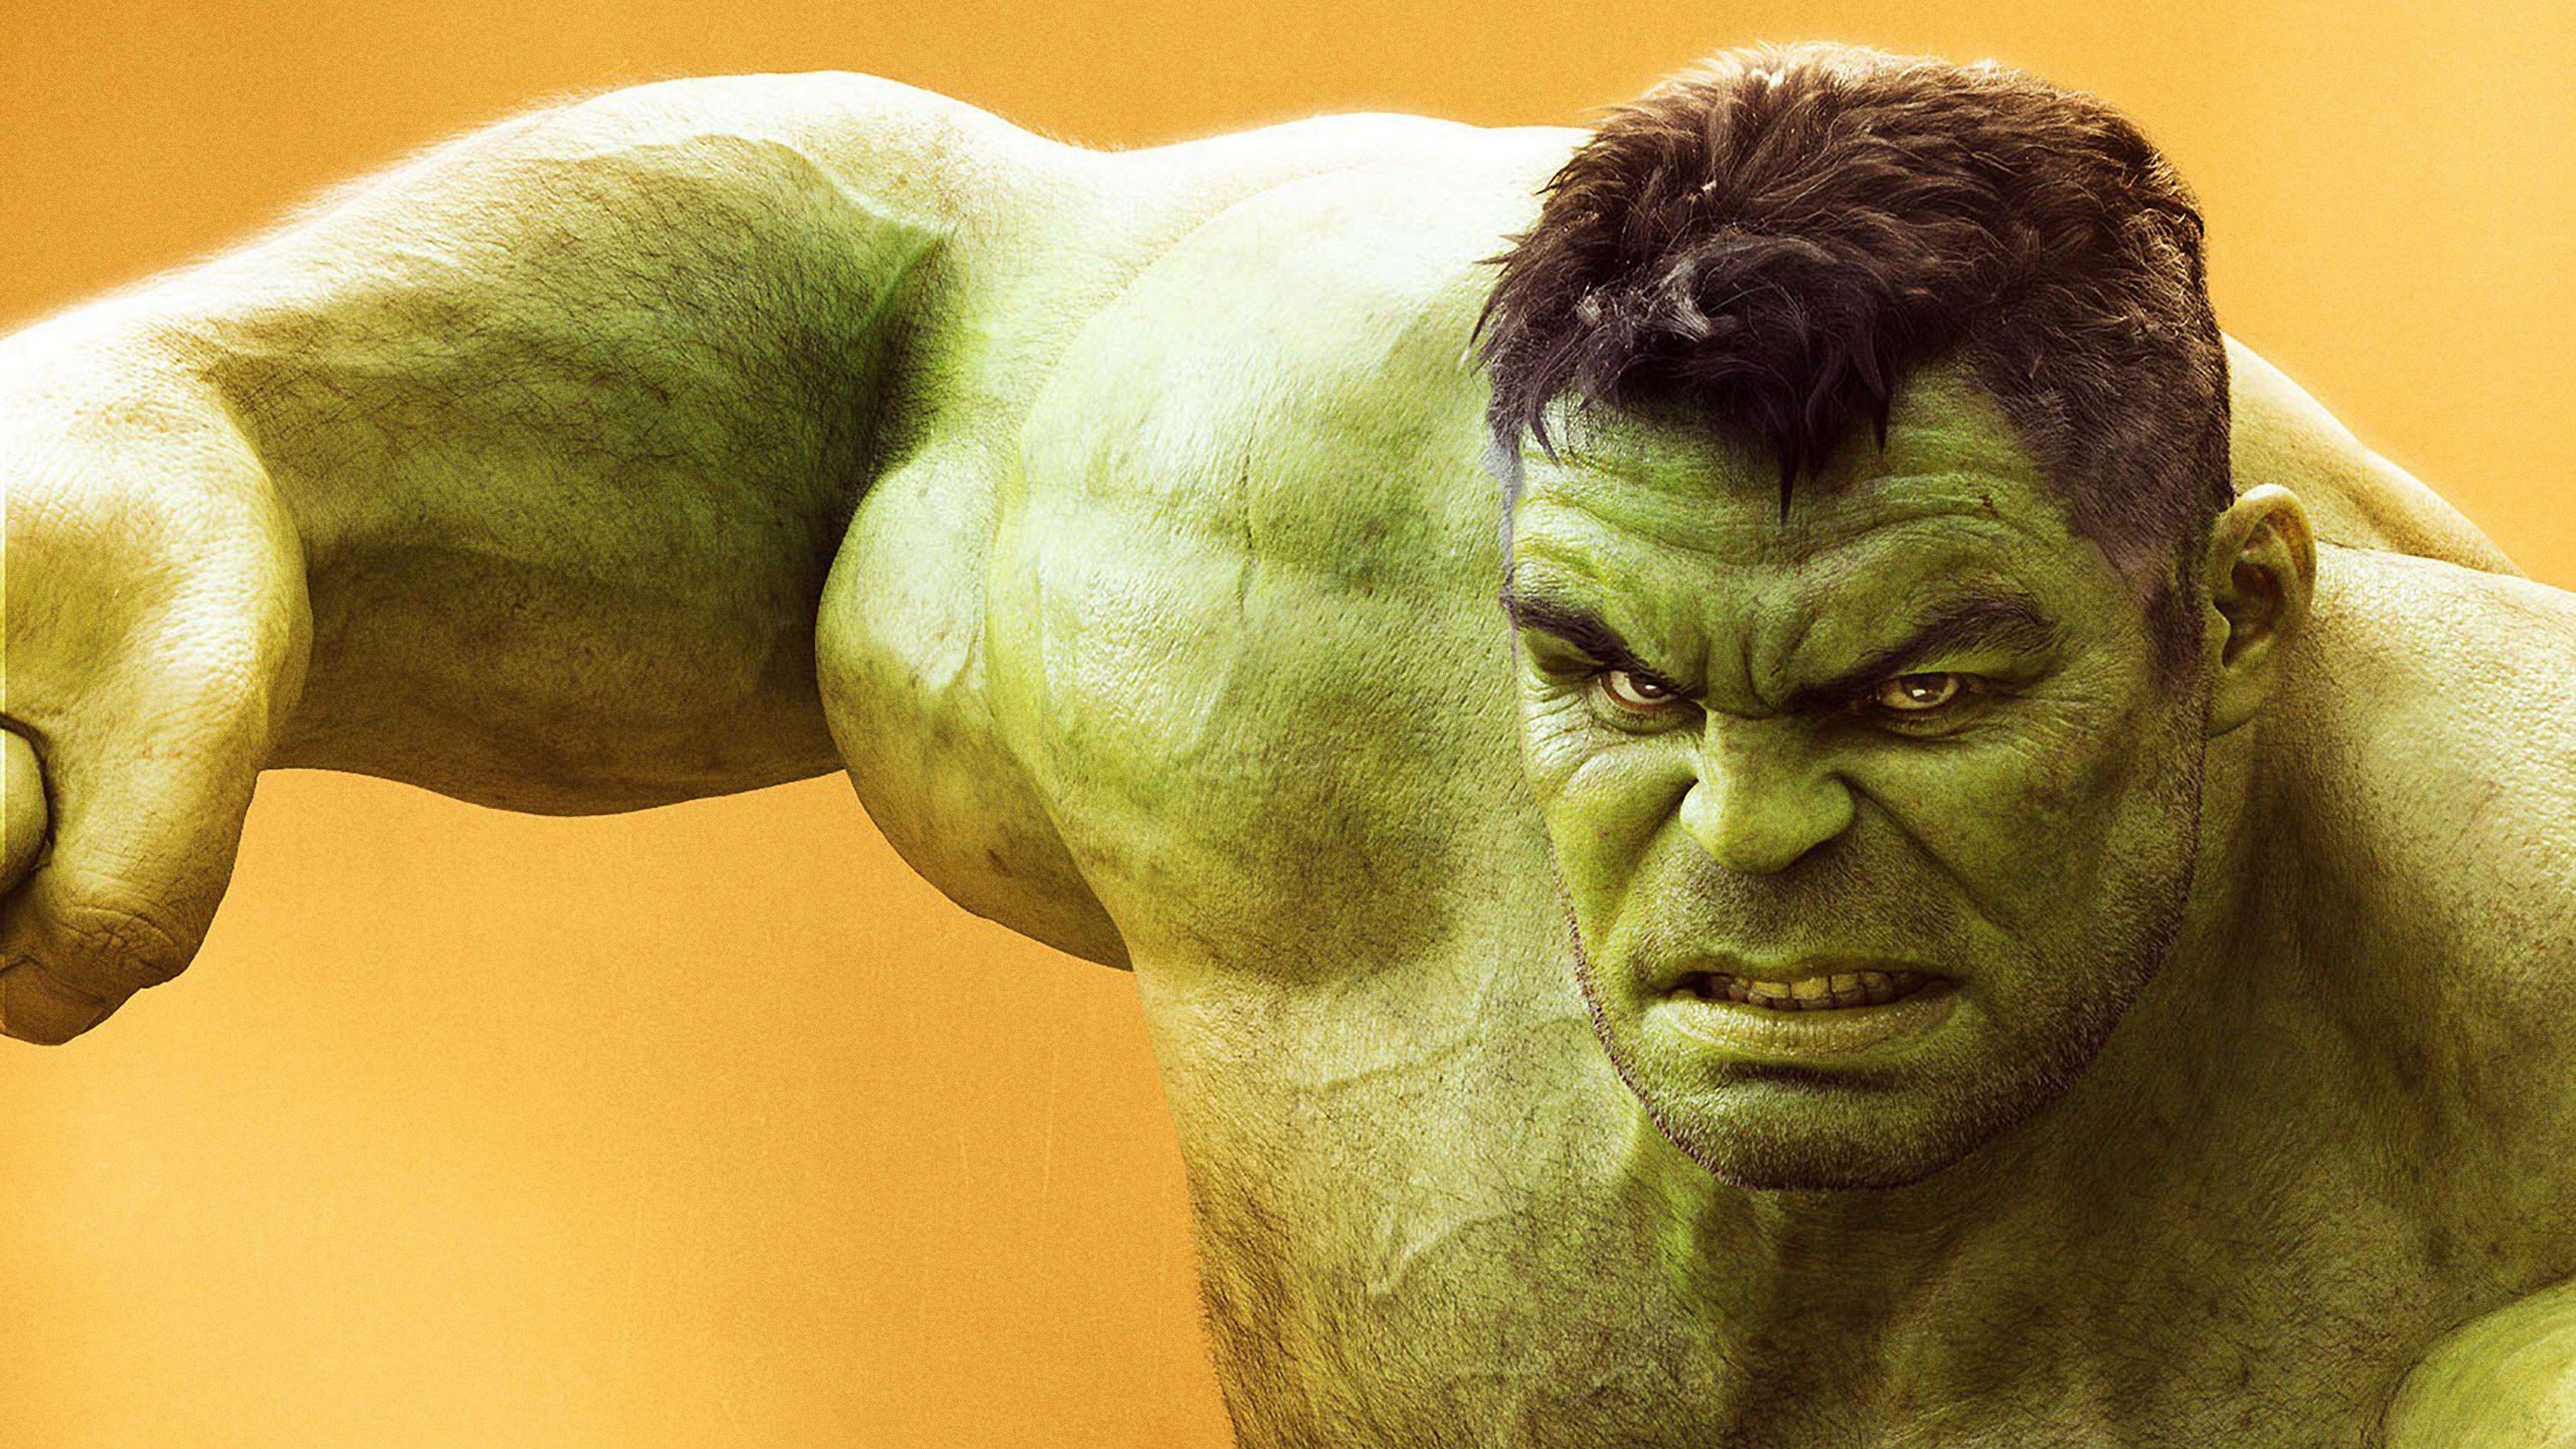 Hulk HD Wallpapers 1080p 73 images